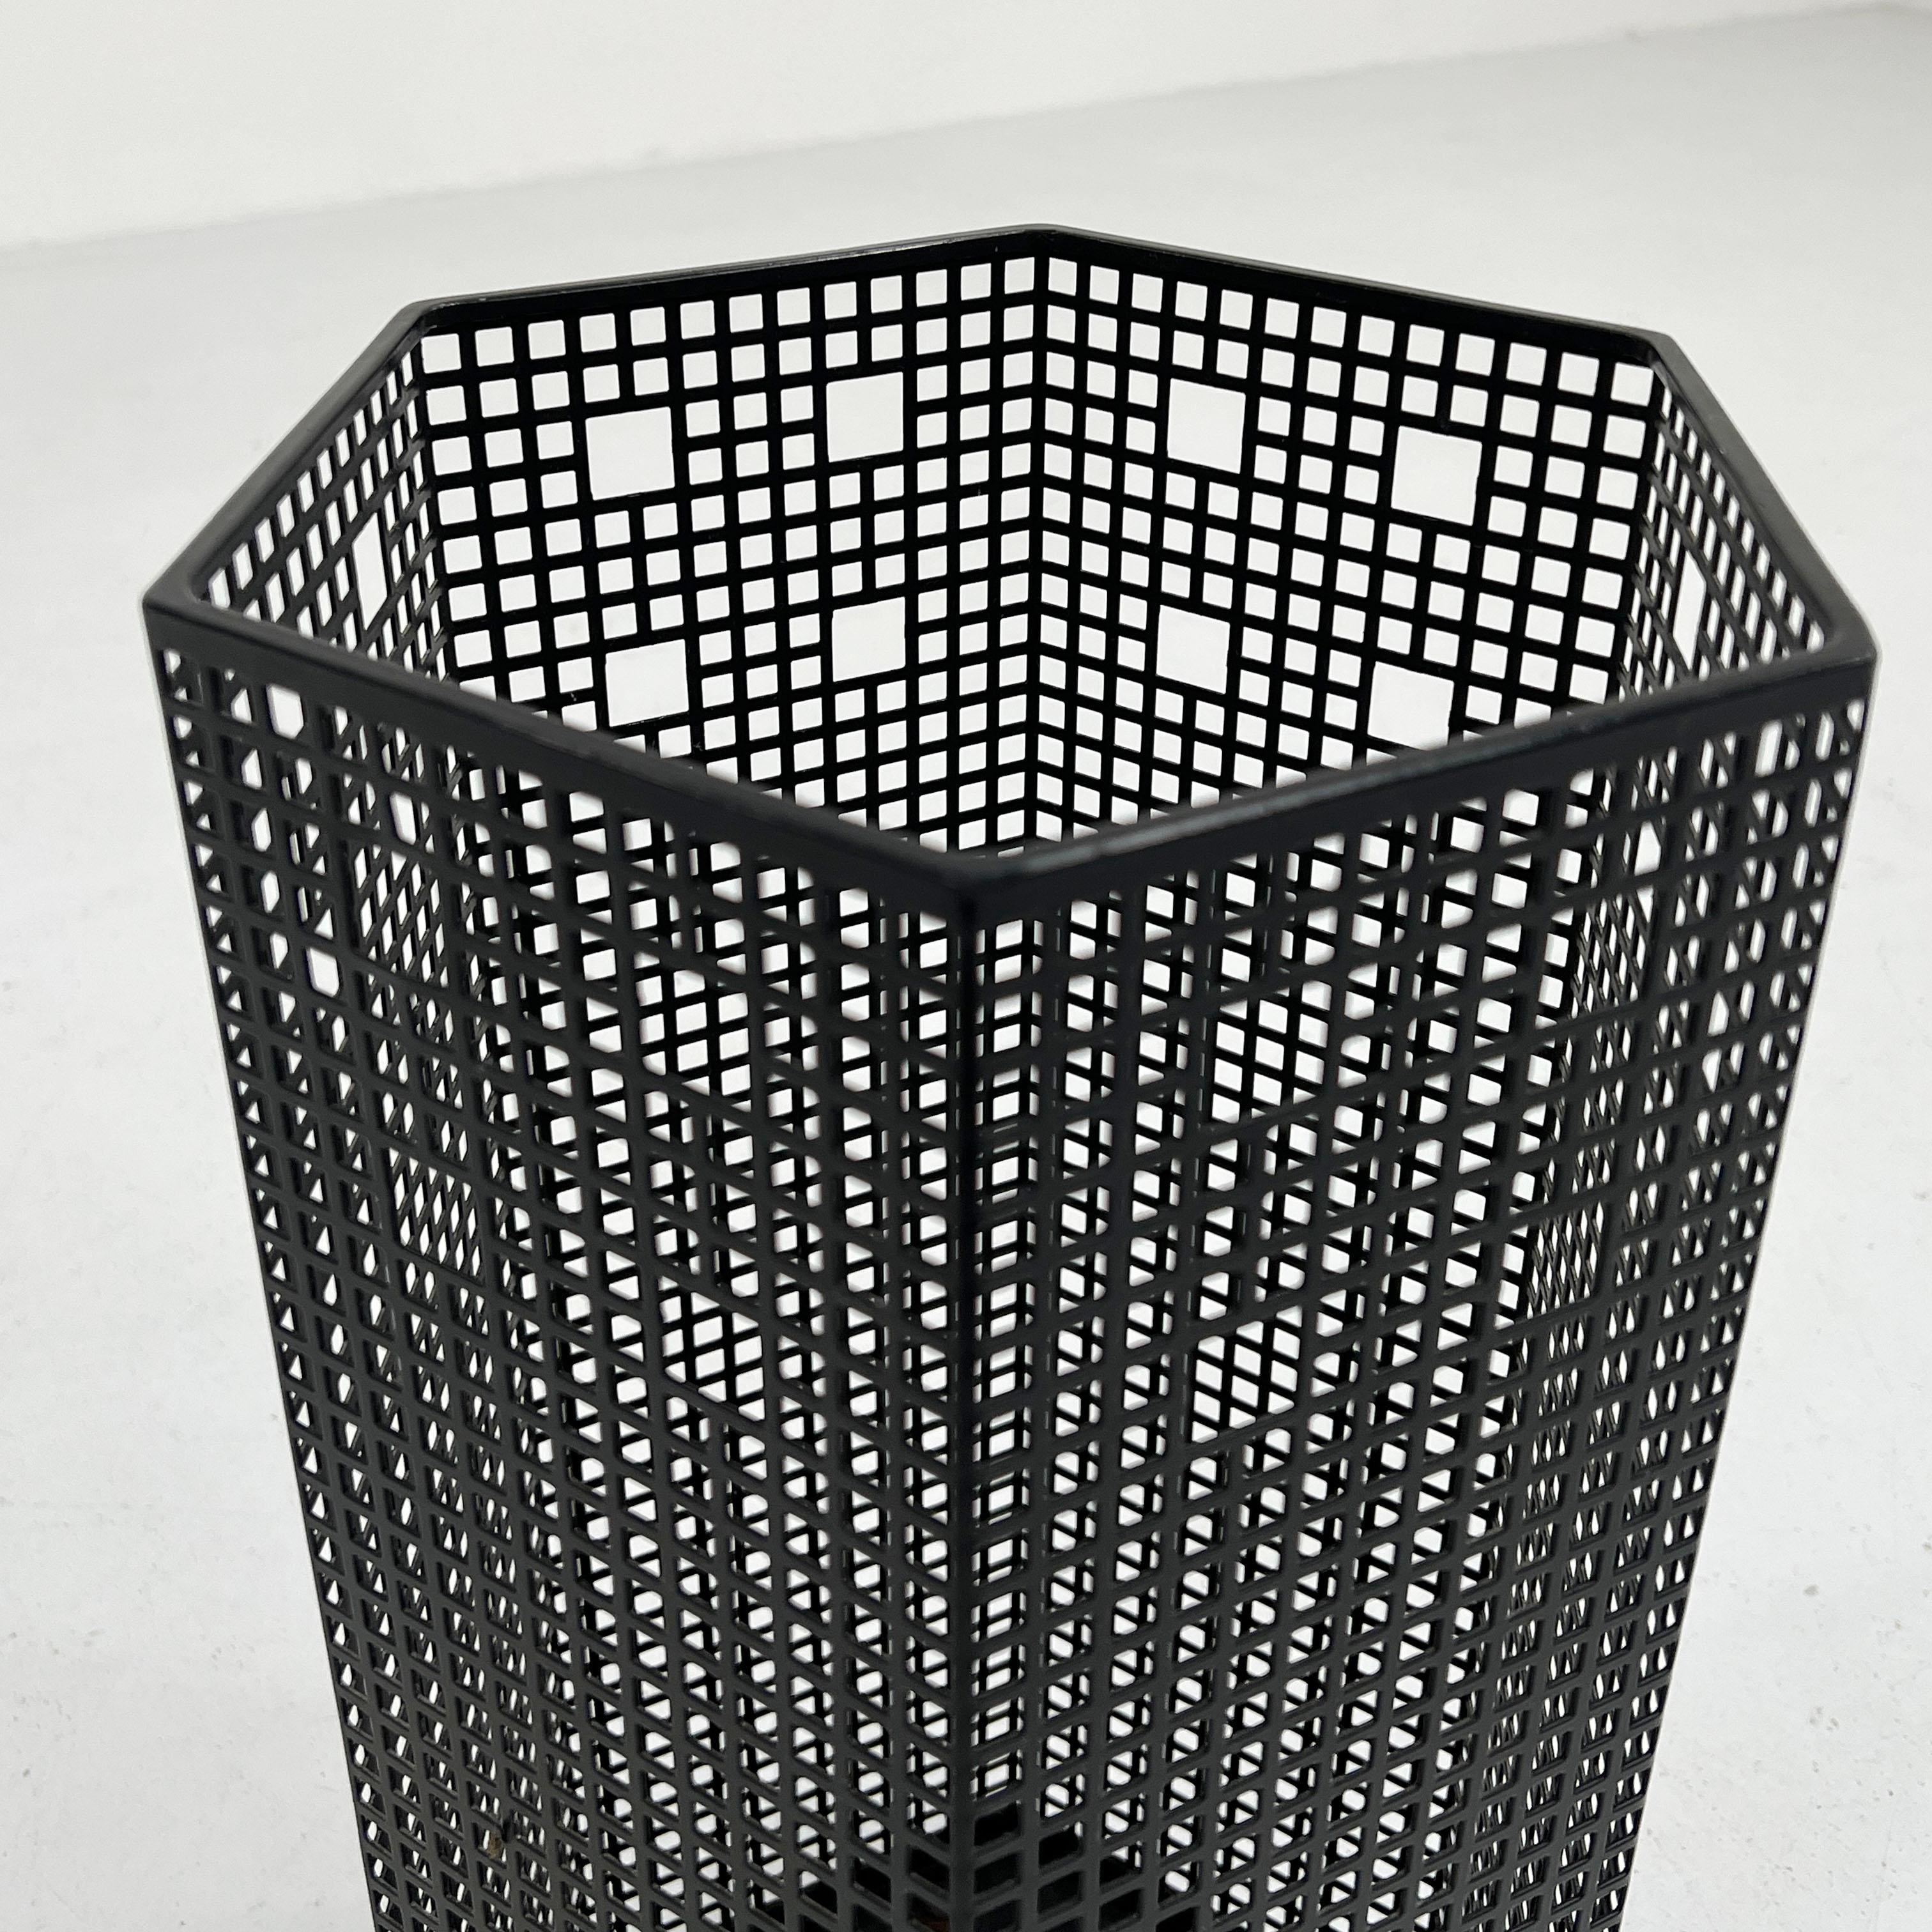 Italian Umbrella Stand or Waste Paper Basket by Josef Hoffmann for Bieffeplast, 1980s